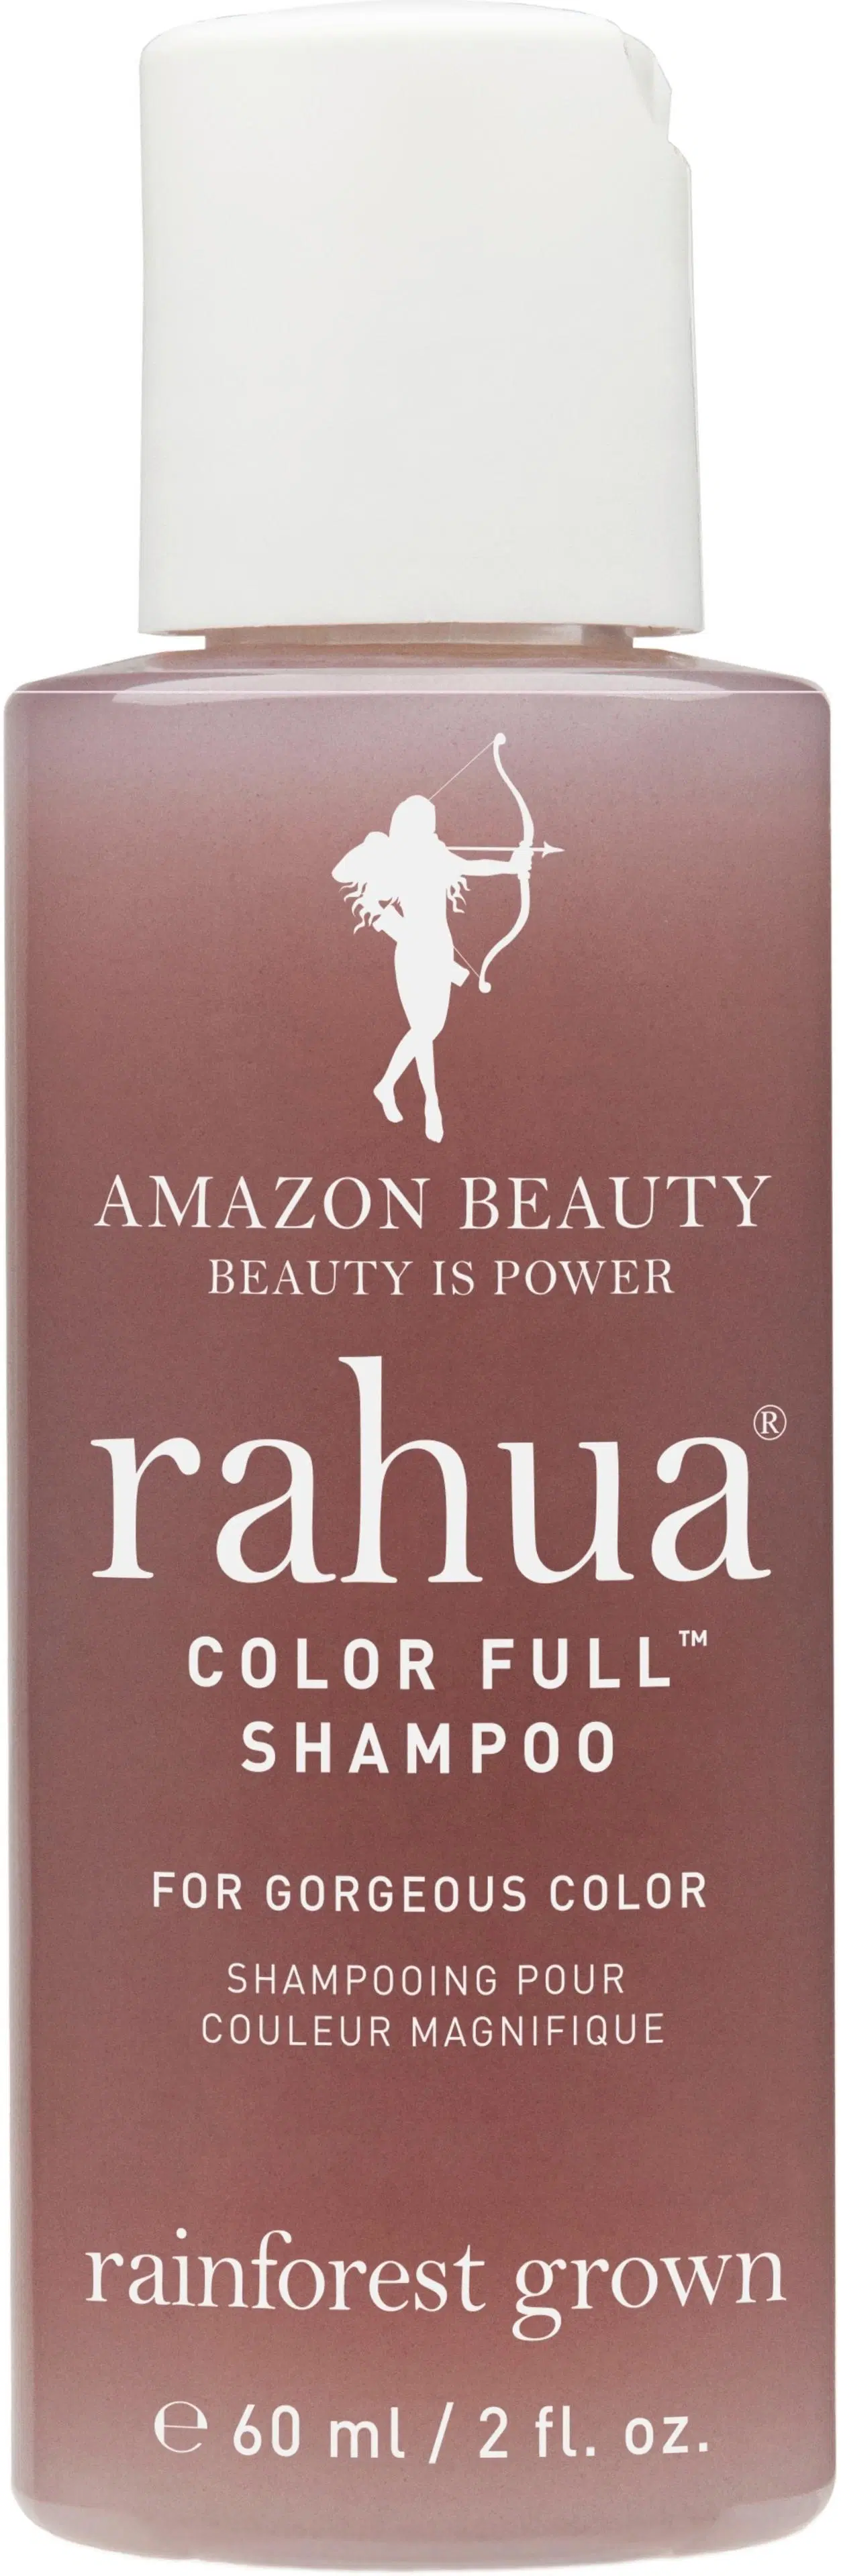 Rahua Color Full™ shampoo matkakoko 60 ml